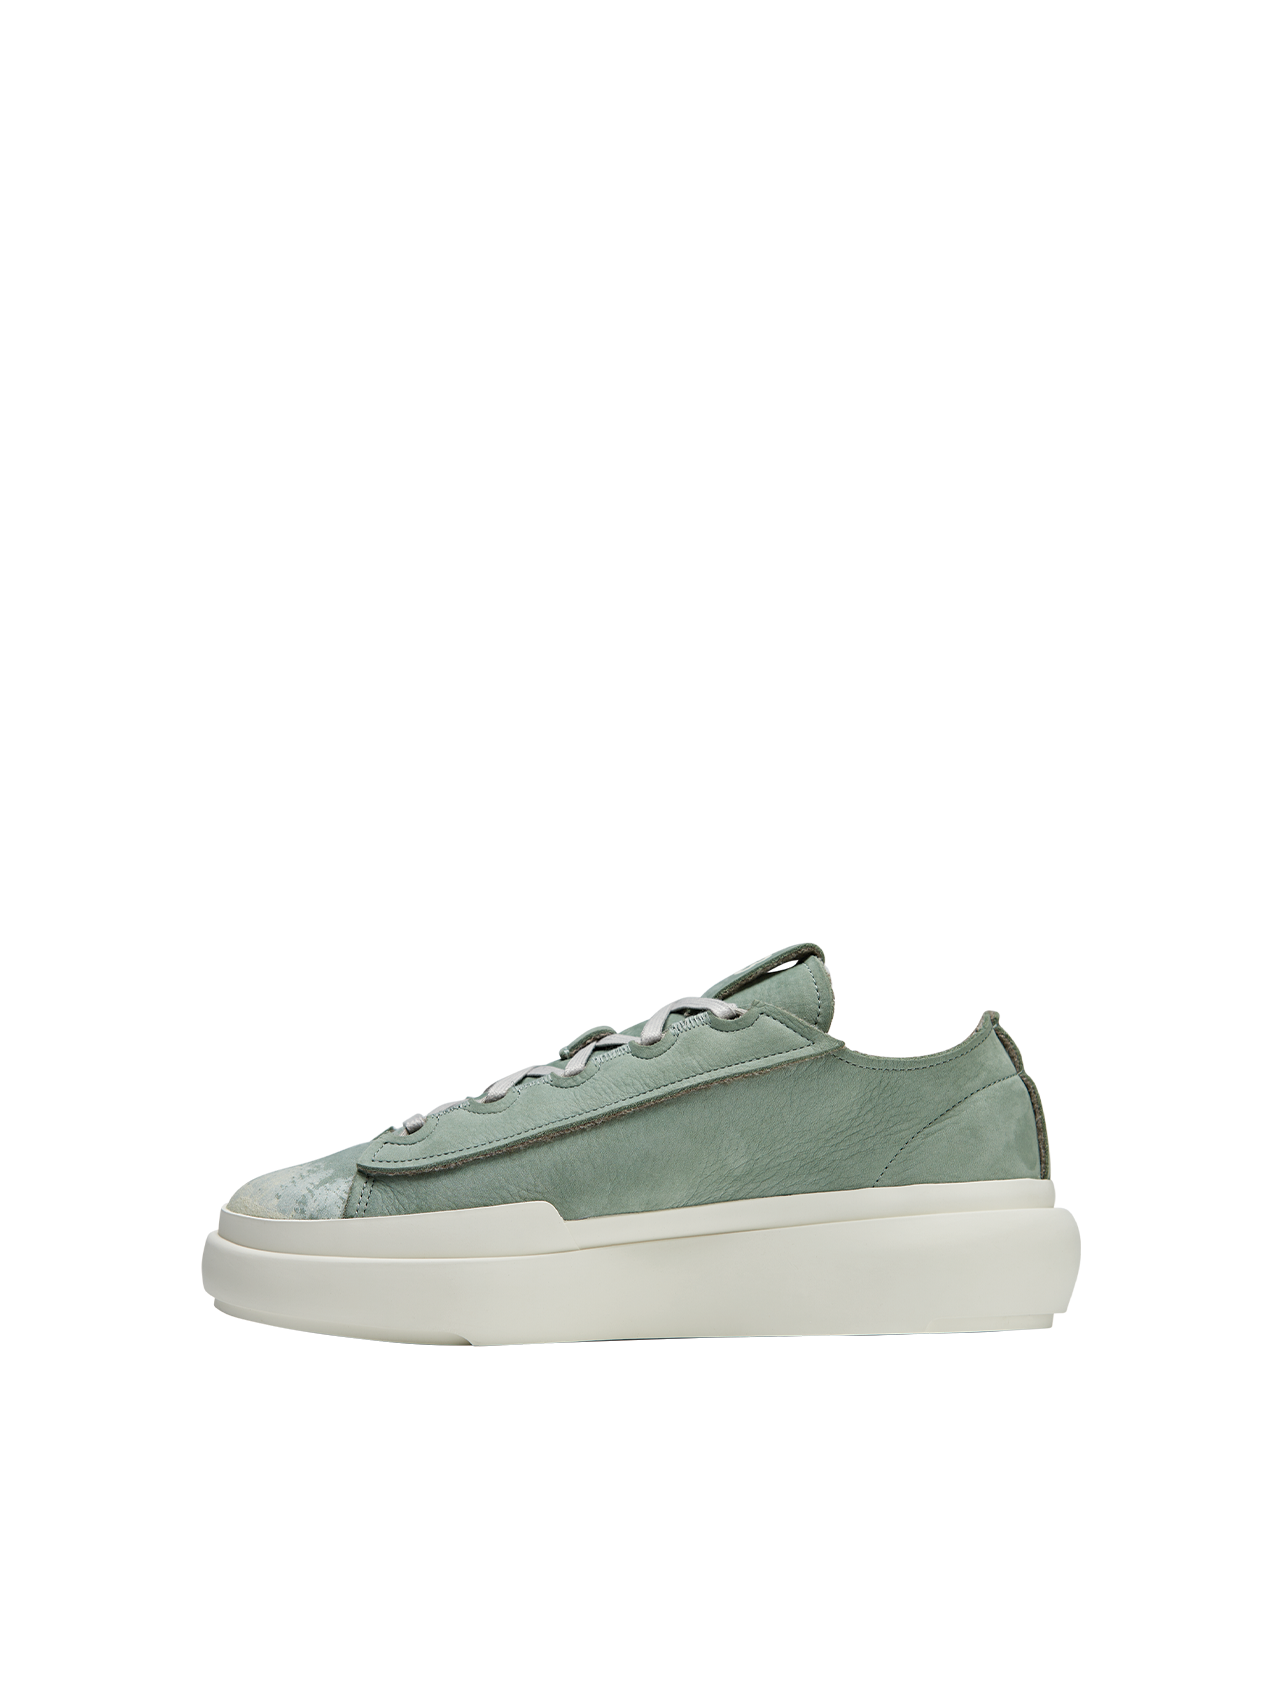 Y-3 Silver Green Nizza Low-Top Sneakers